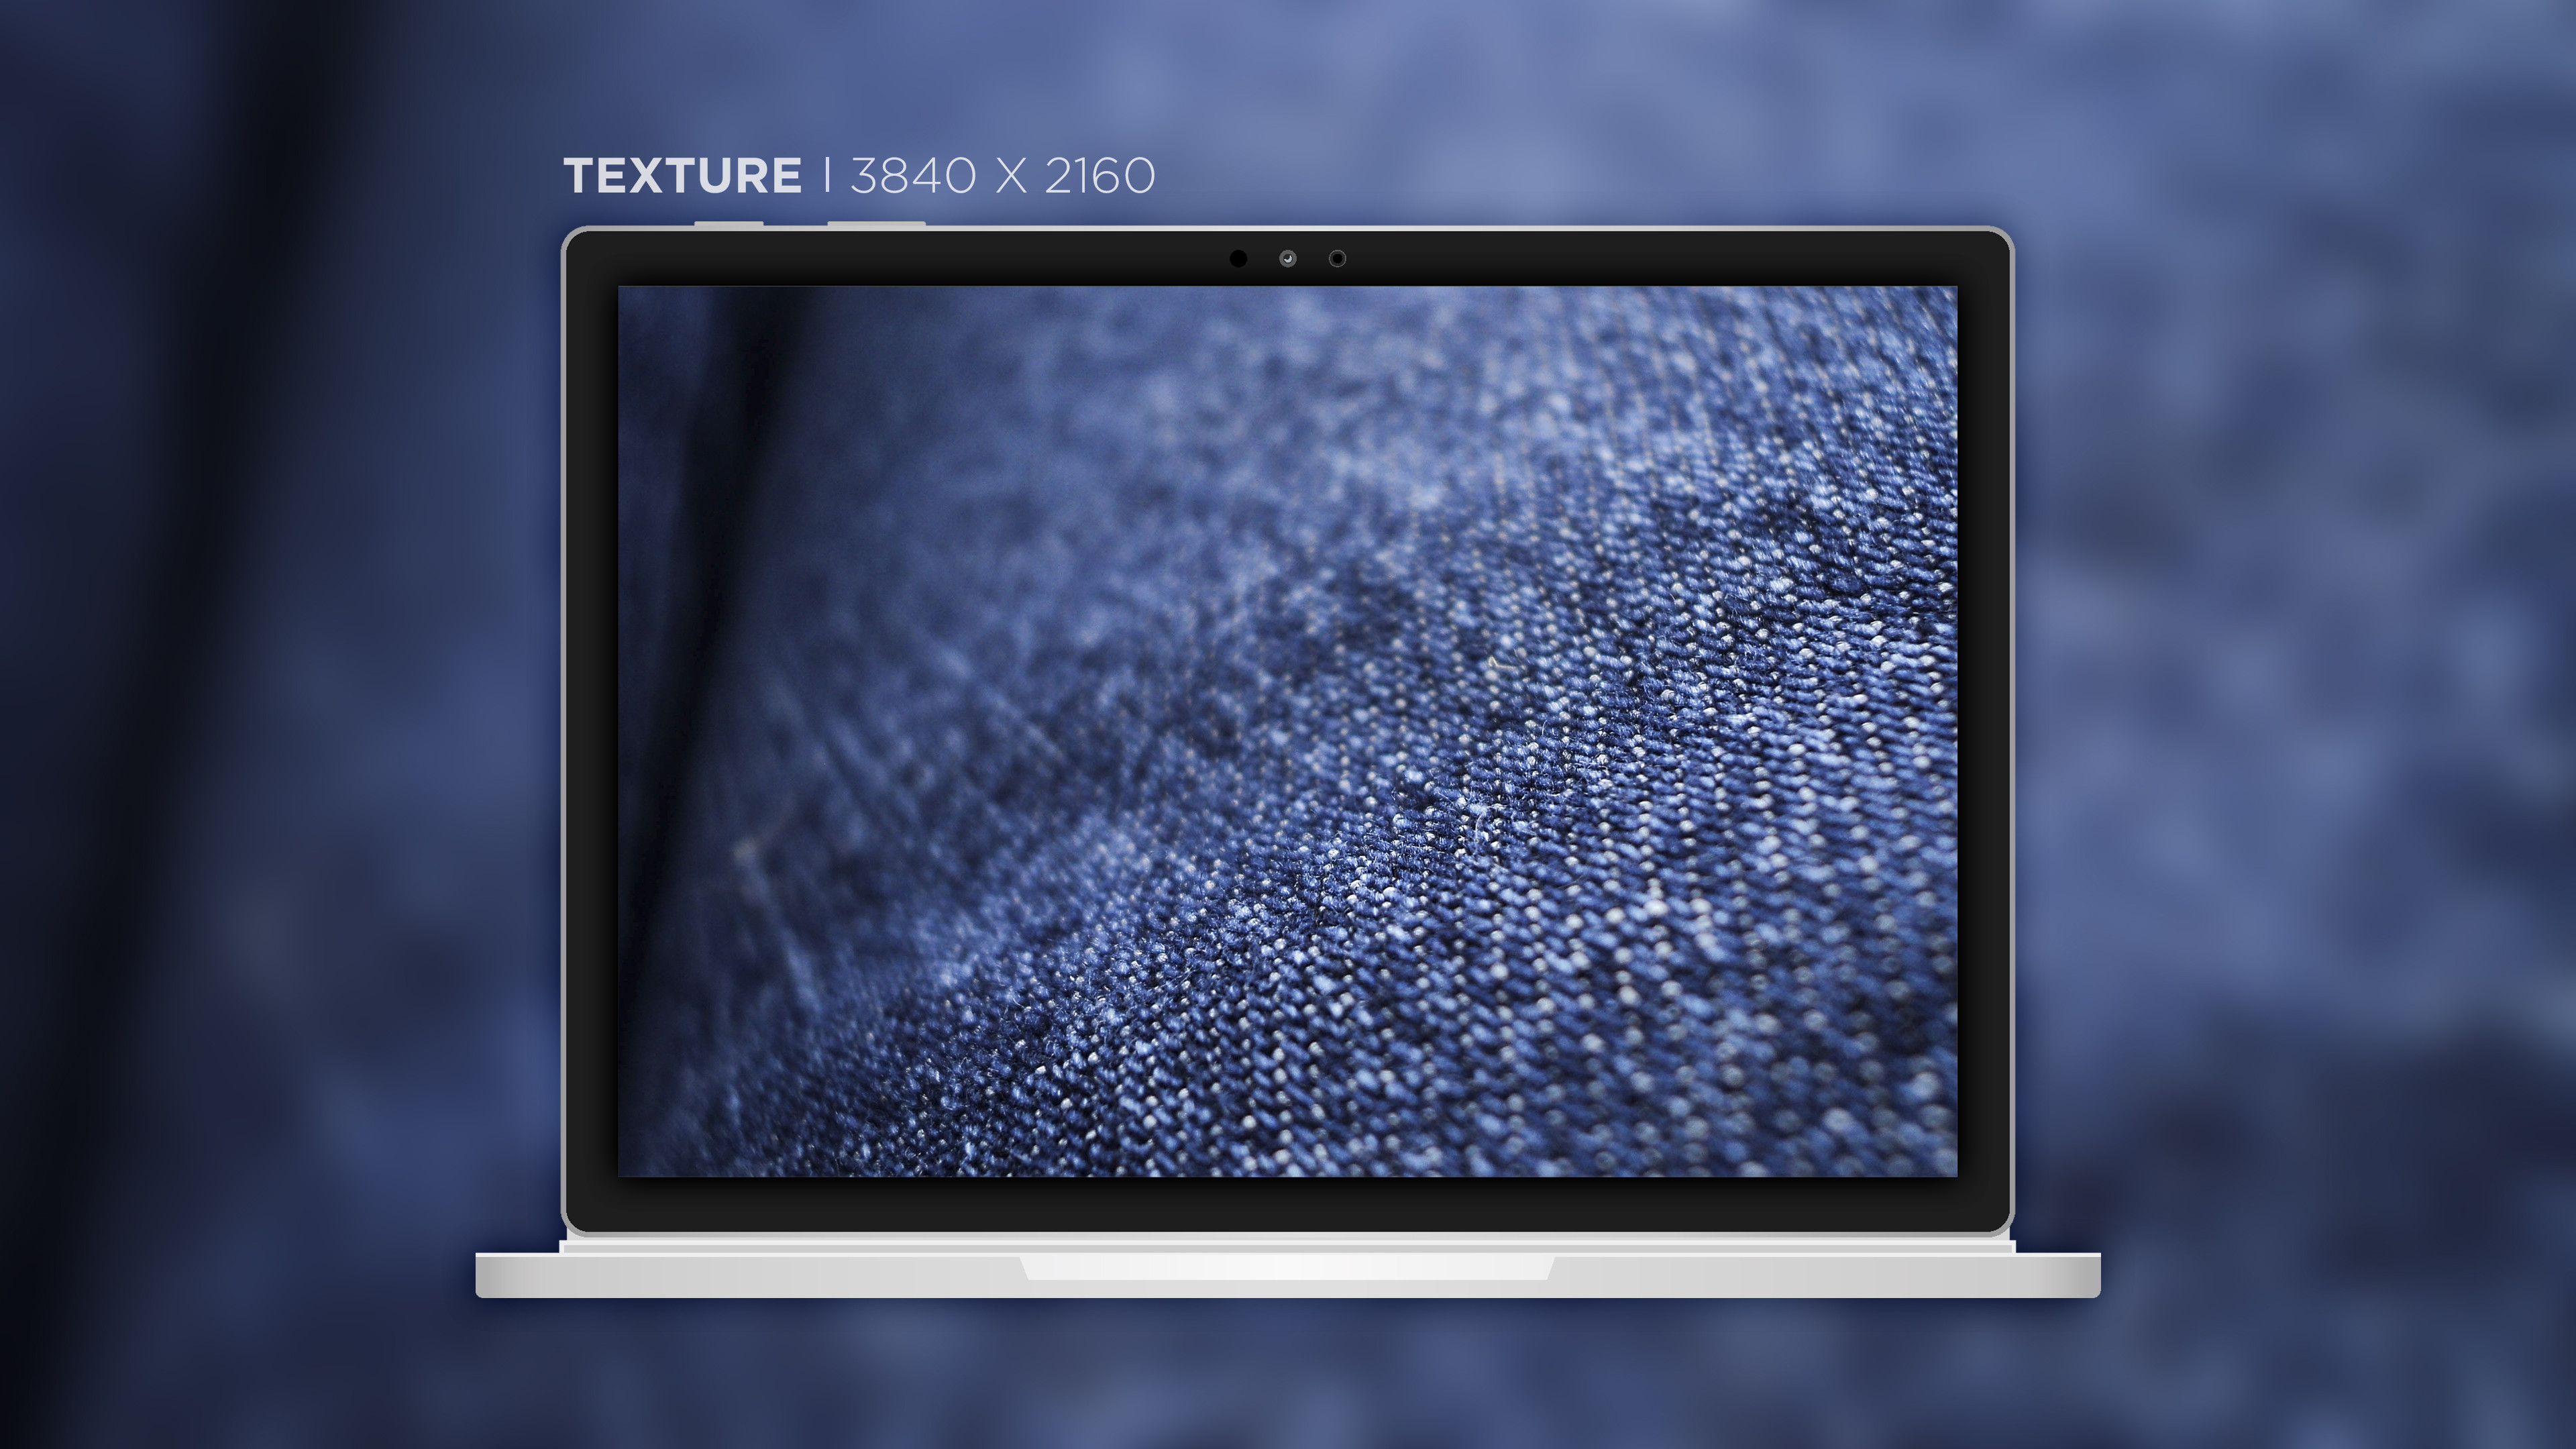 3840x2160 Texture - 4K Wallpaper by MauroTch Texture - 4K Wallpaper by MauroTch